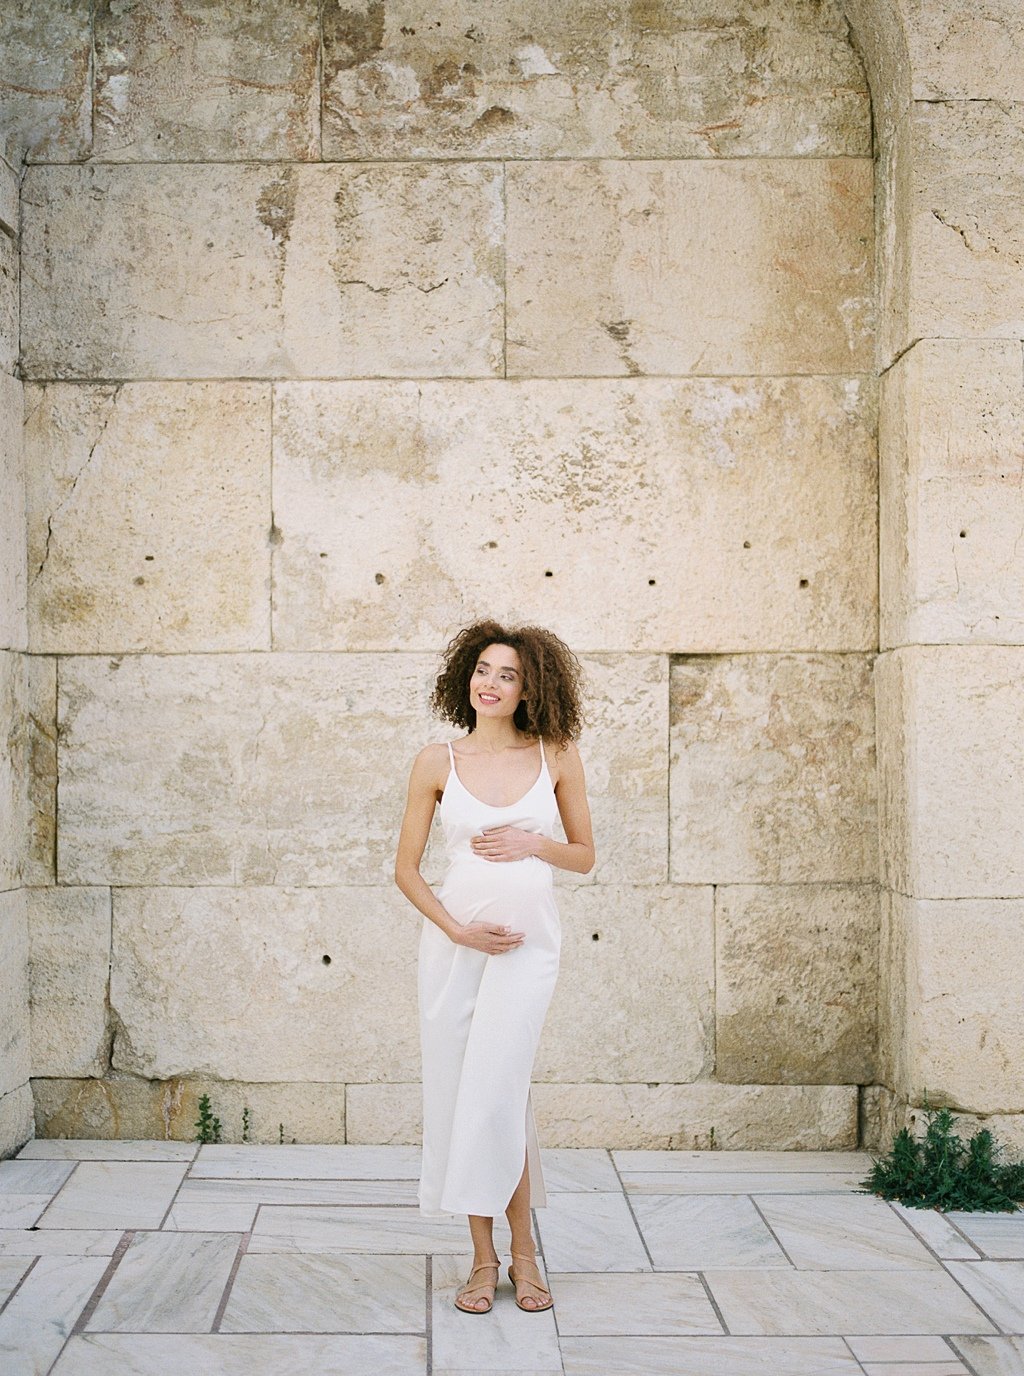 50_Tanja Kibogo_Branding-Portraits-The Gaia Method-Athens.jpg